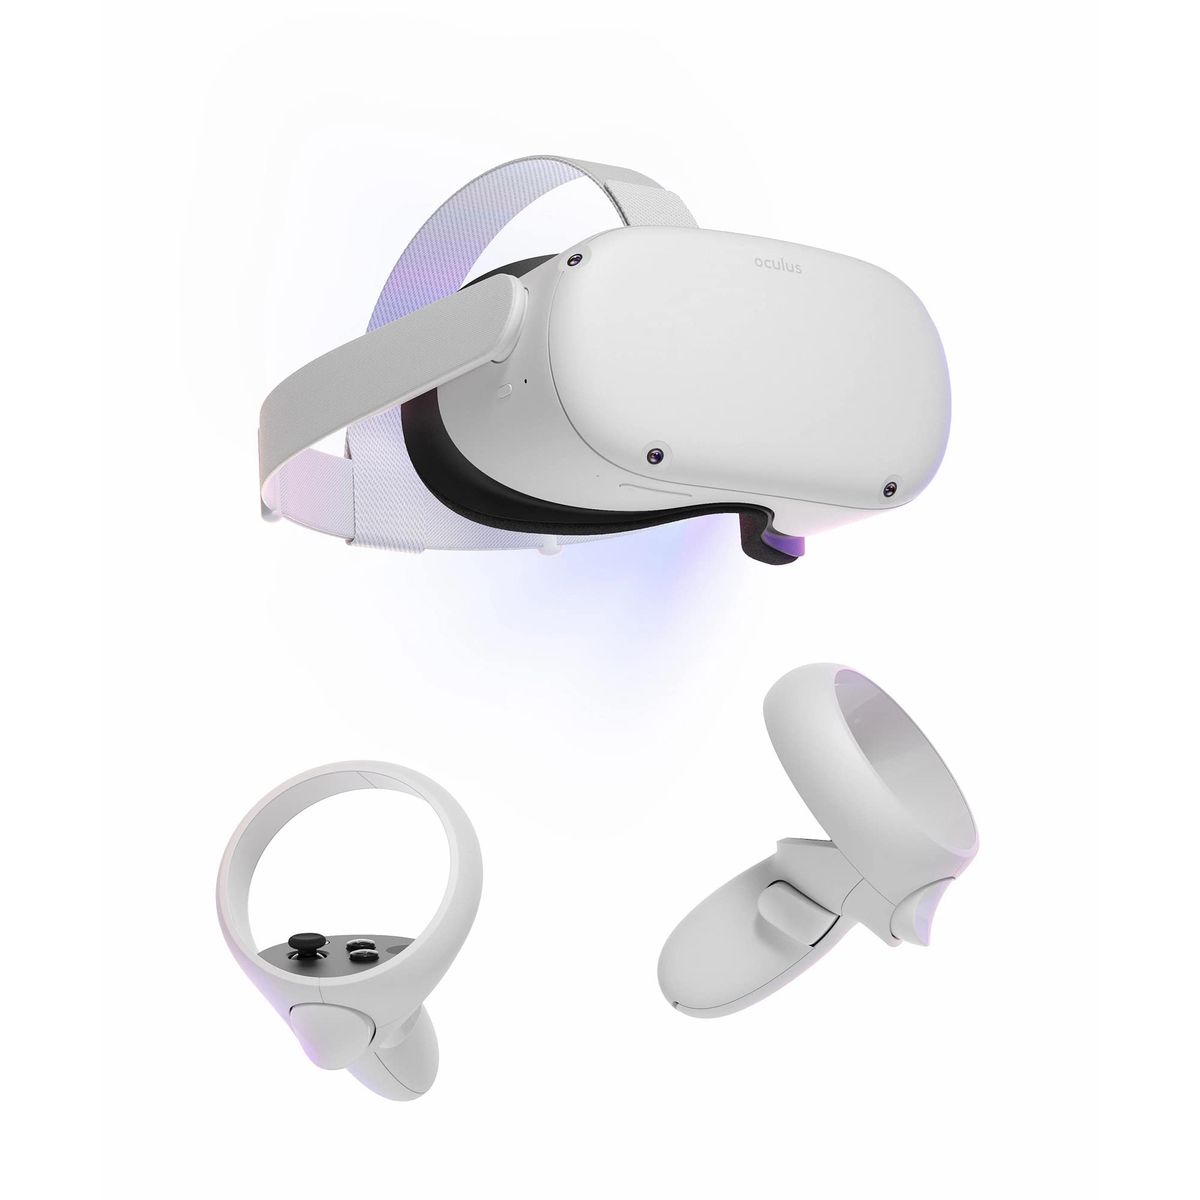 Meta Quest 2 VR headset worth it in 2023